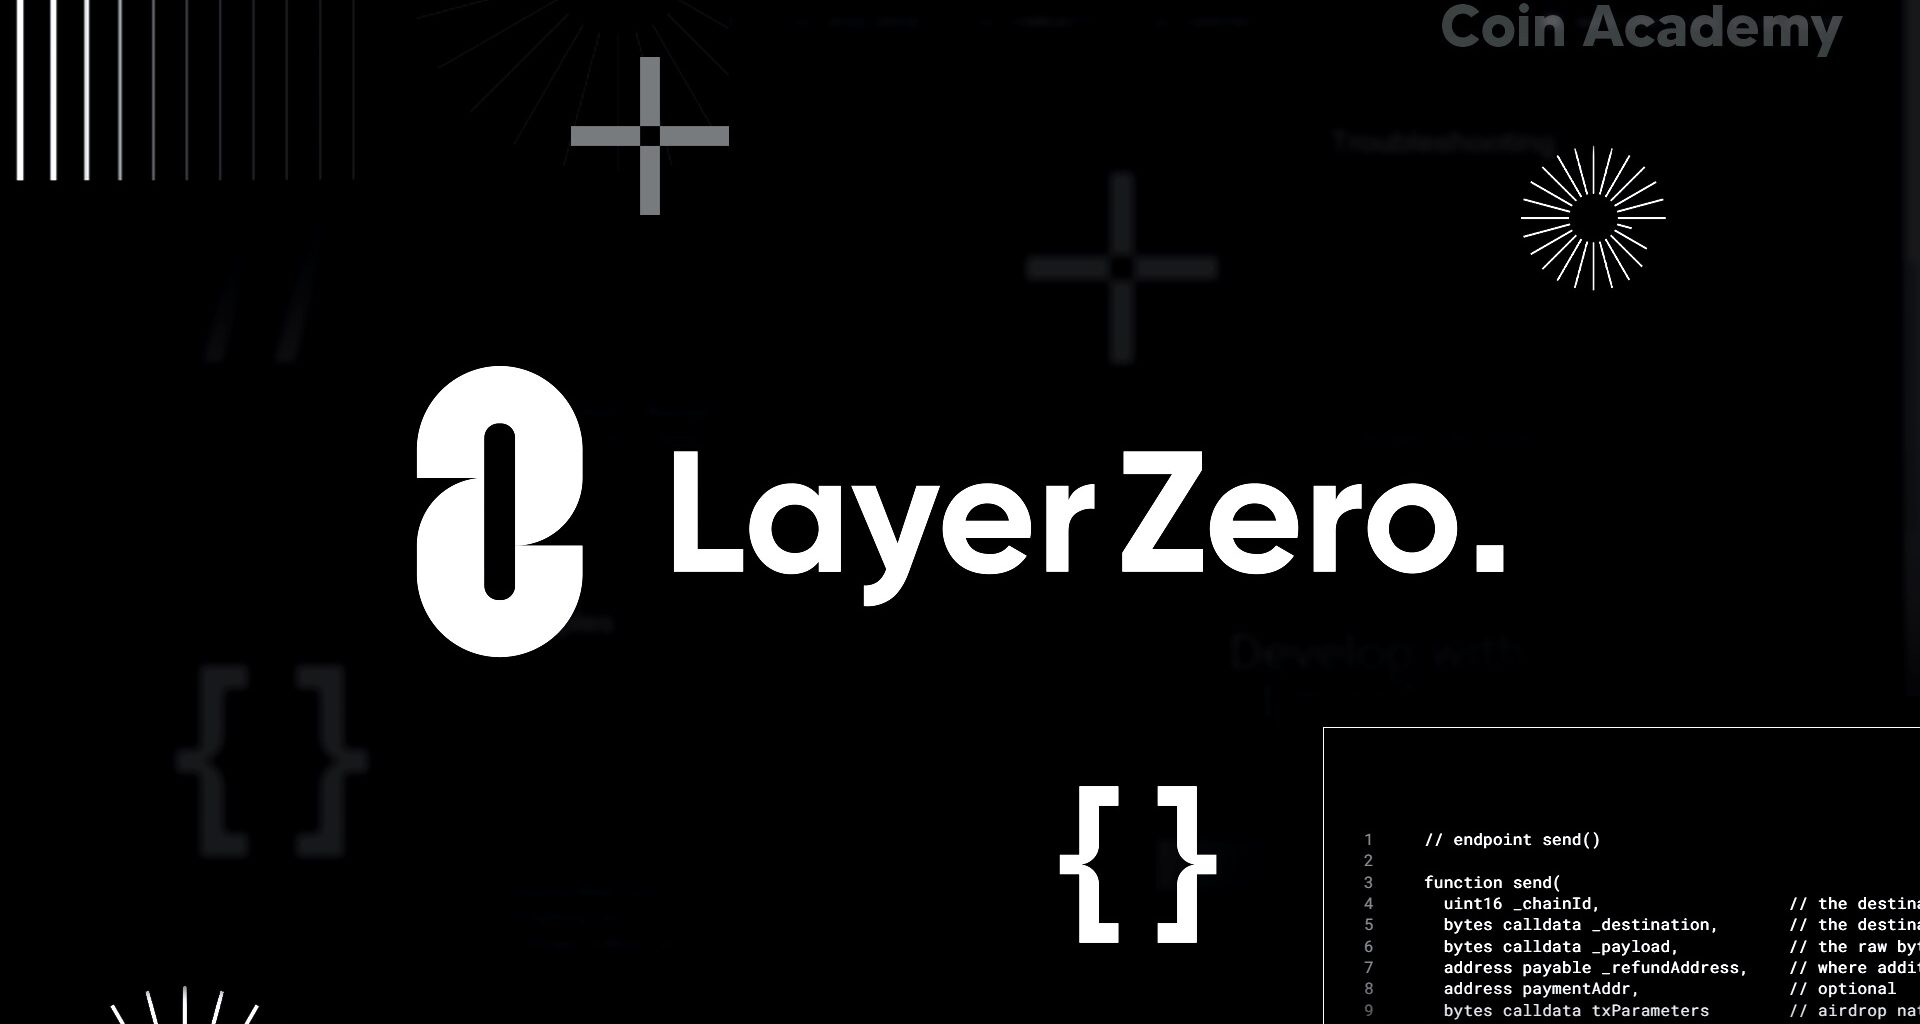 LayerZero crypto